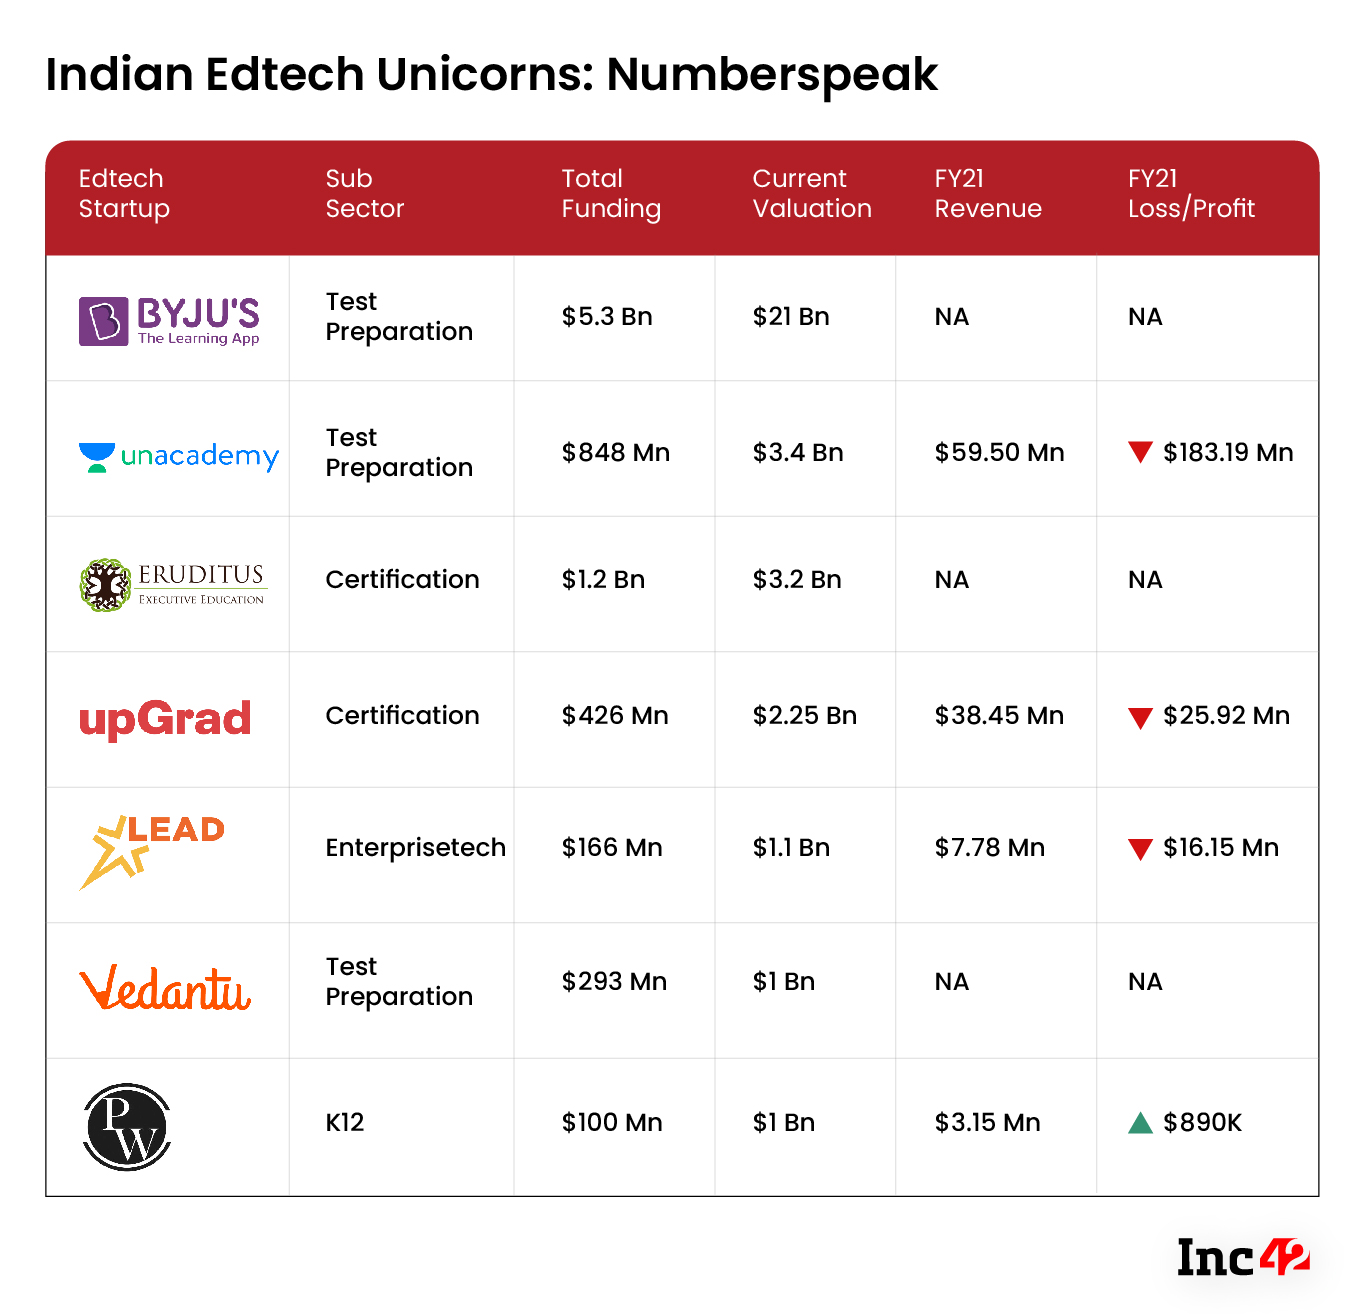 Indian Edtech Unicorns: Numberspeak